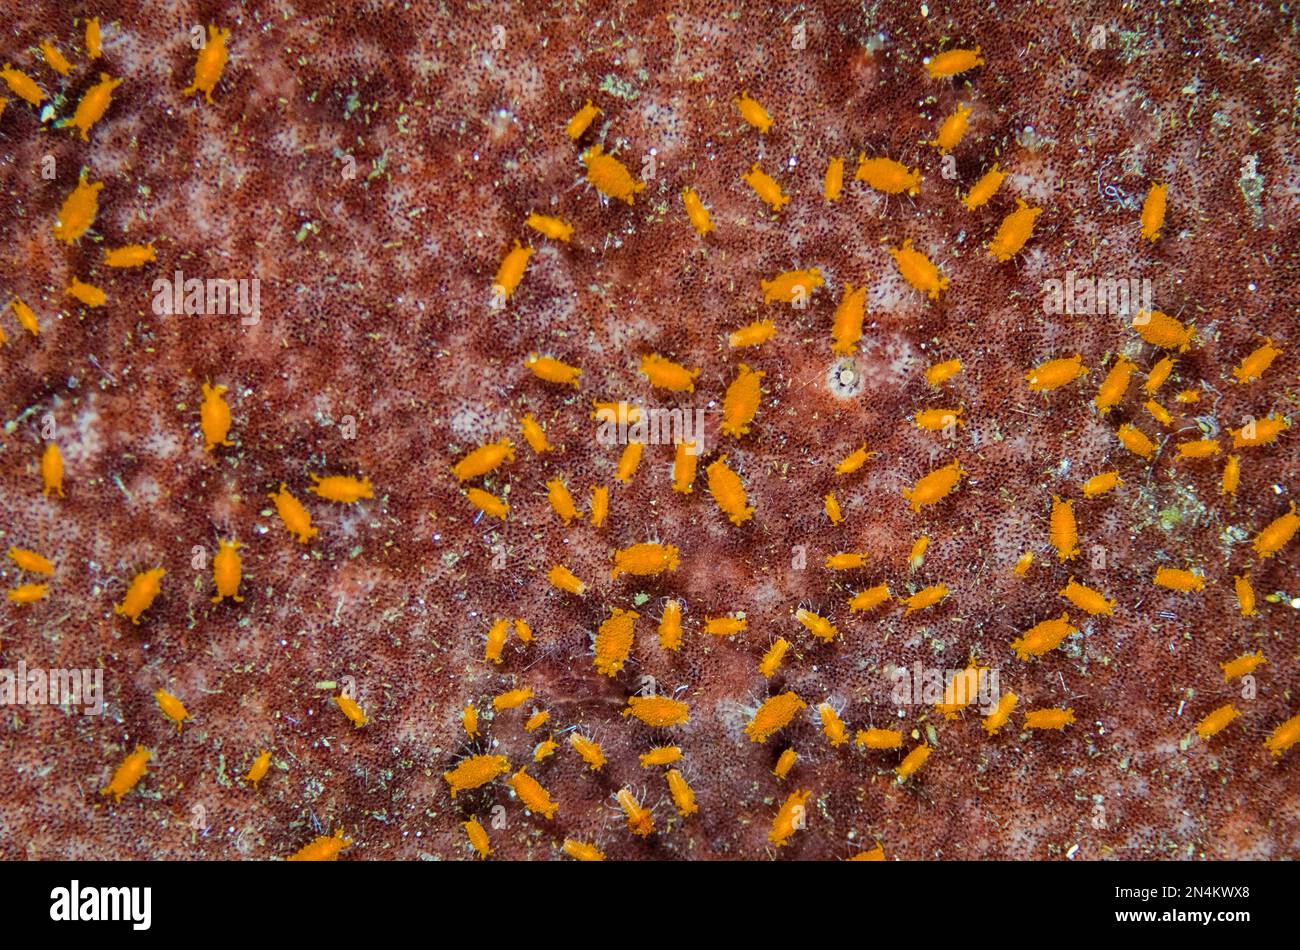 Sponge Isopods, Santia sp, on Sponge, Porifera Phylum,  Gorango Mini dive site, Weda, Halmahera, North Maluku, Indonesia, Halmahera Sea Stock Photo